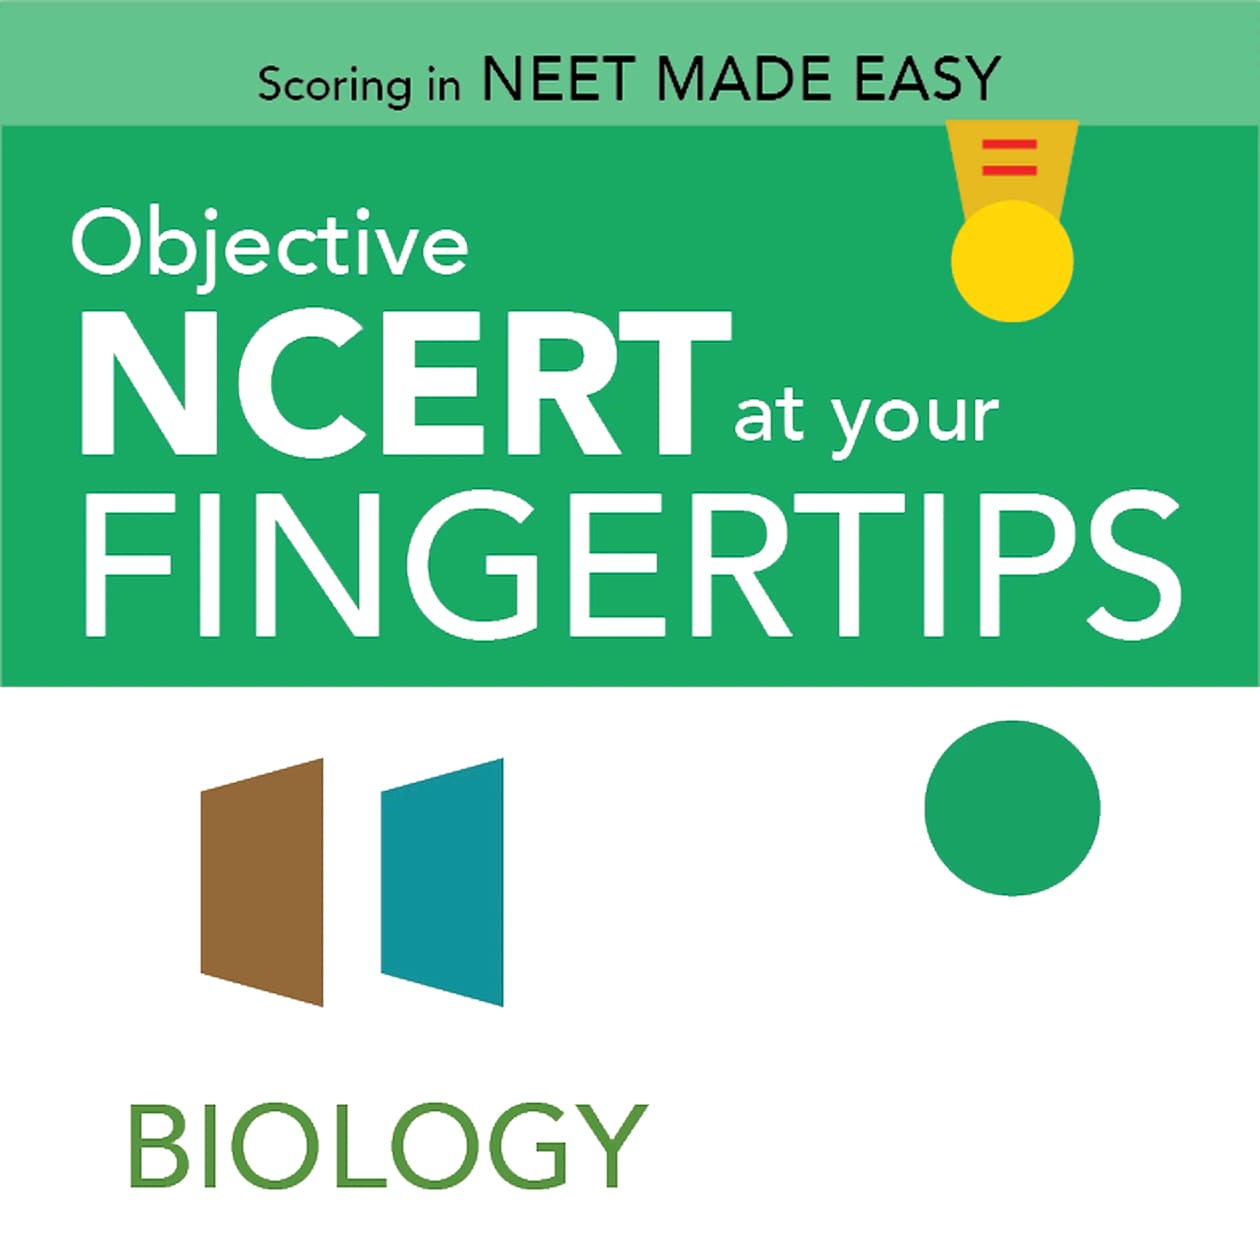 neet-fingertips